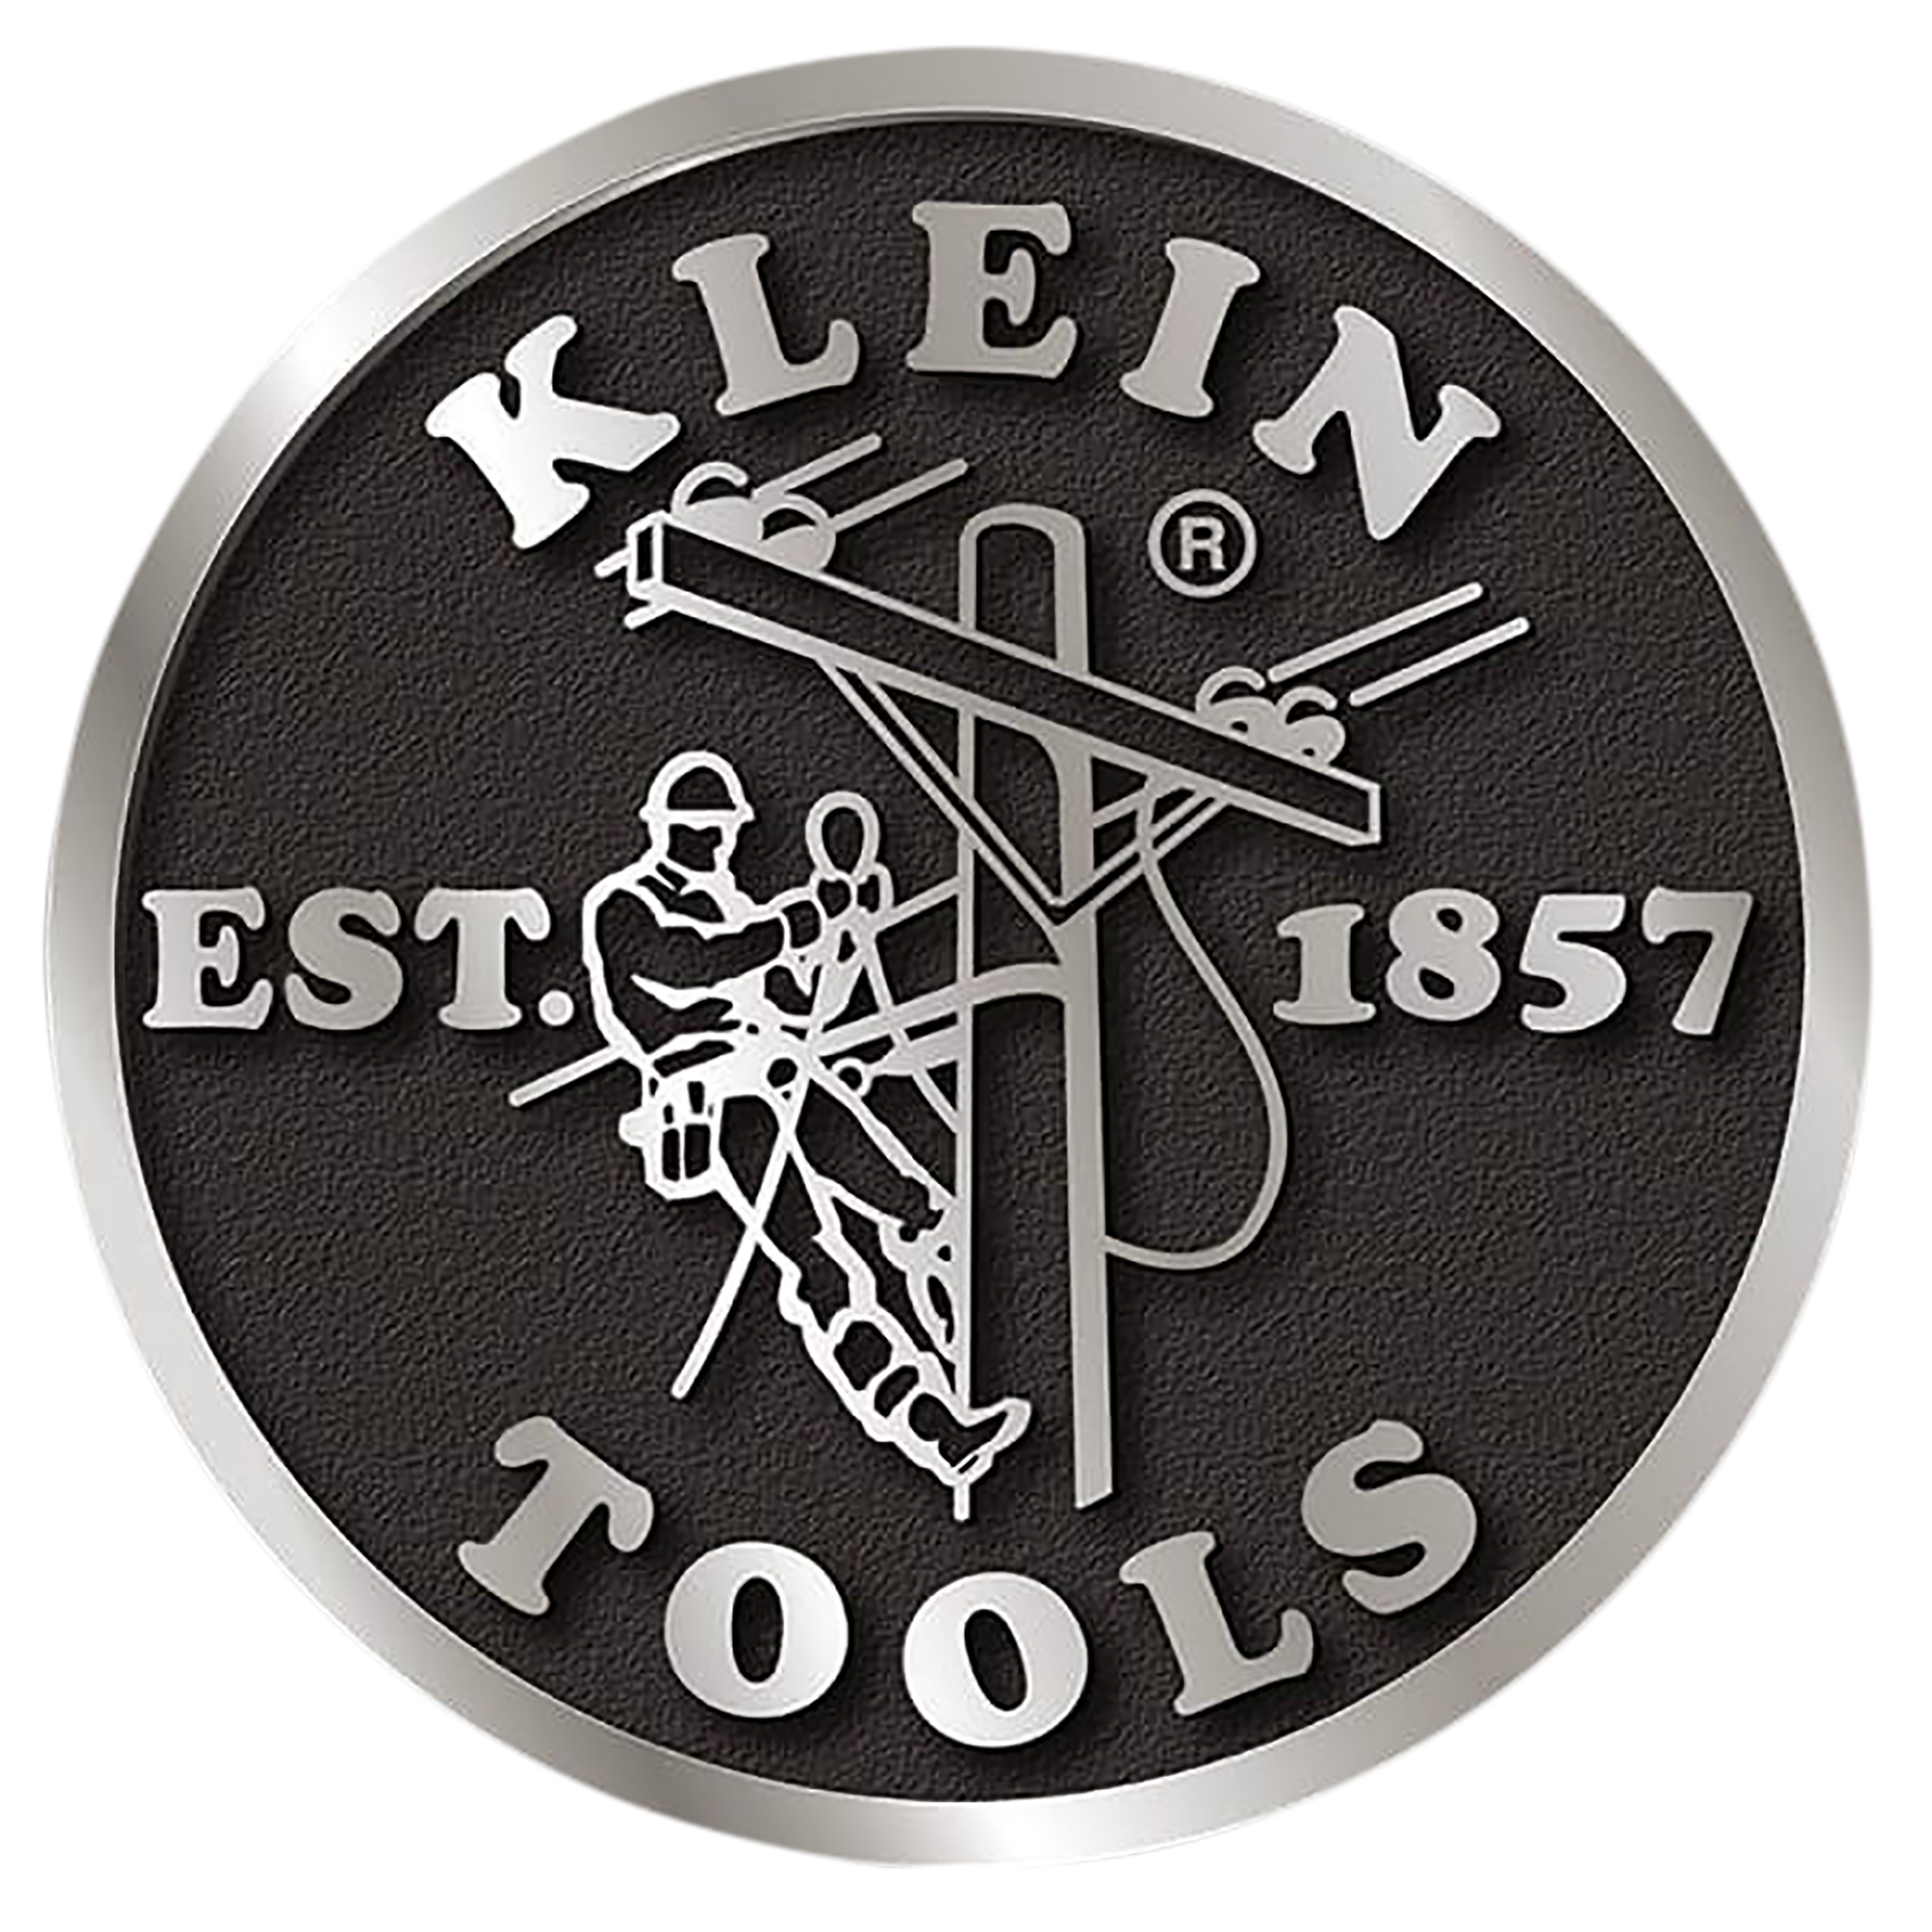 Kleintools logo 12062020 v120230109 2556 1i5wurg